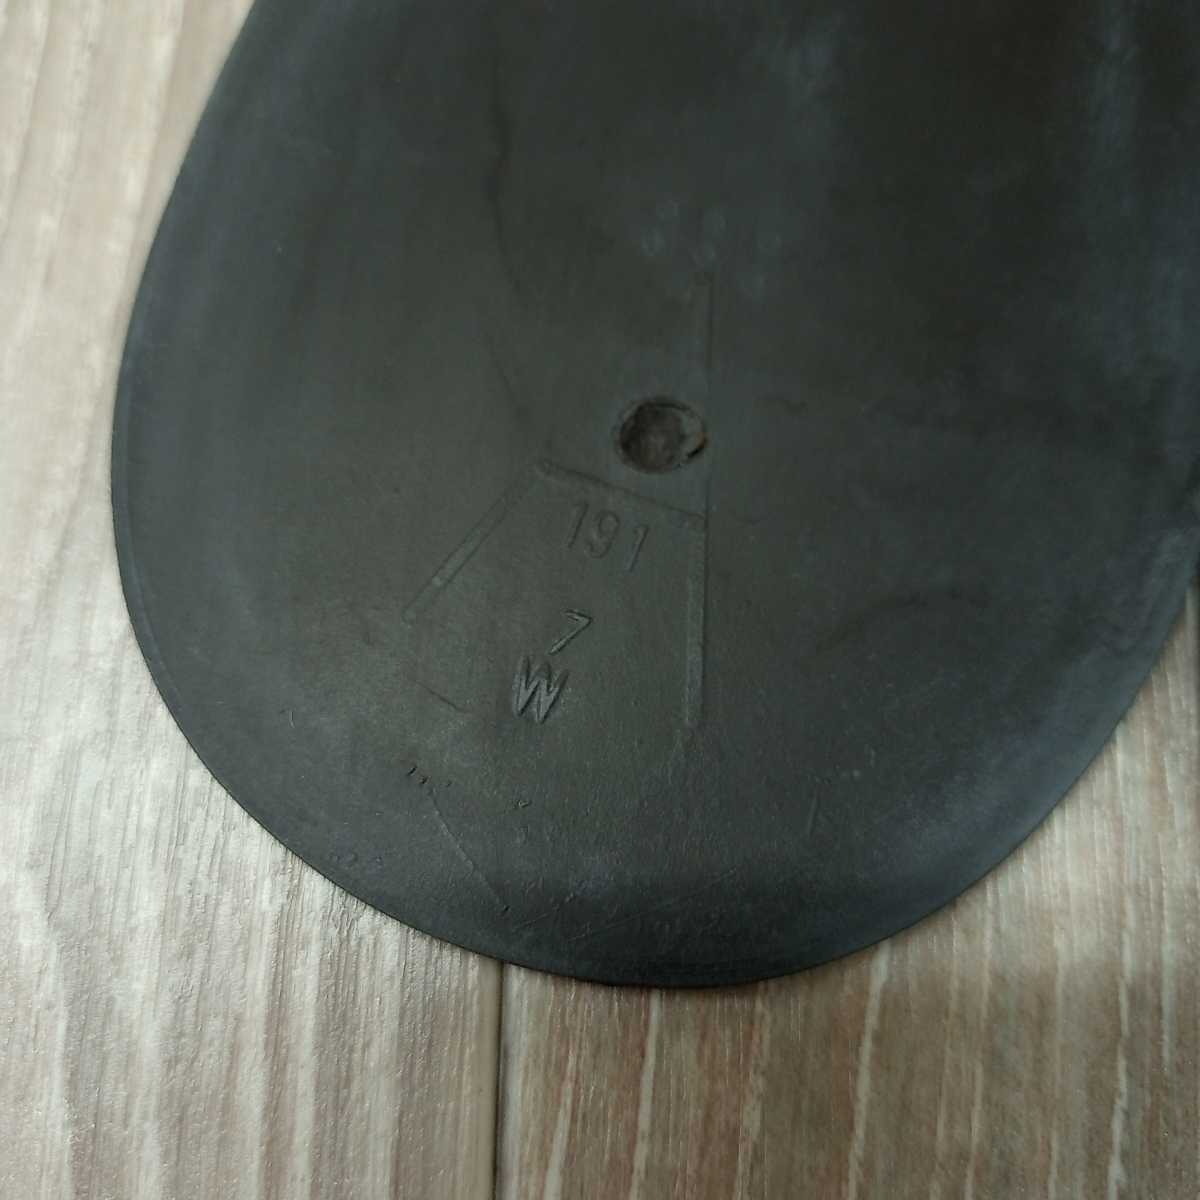 Dainite Dyna ito1 pair minute sole 191 7 W scorching tea shoes repair repair parts Britain made 